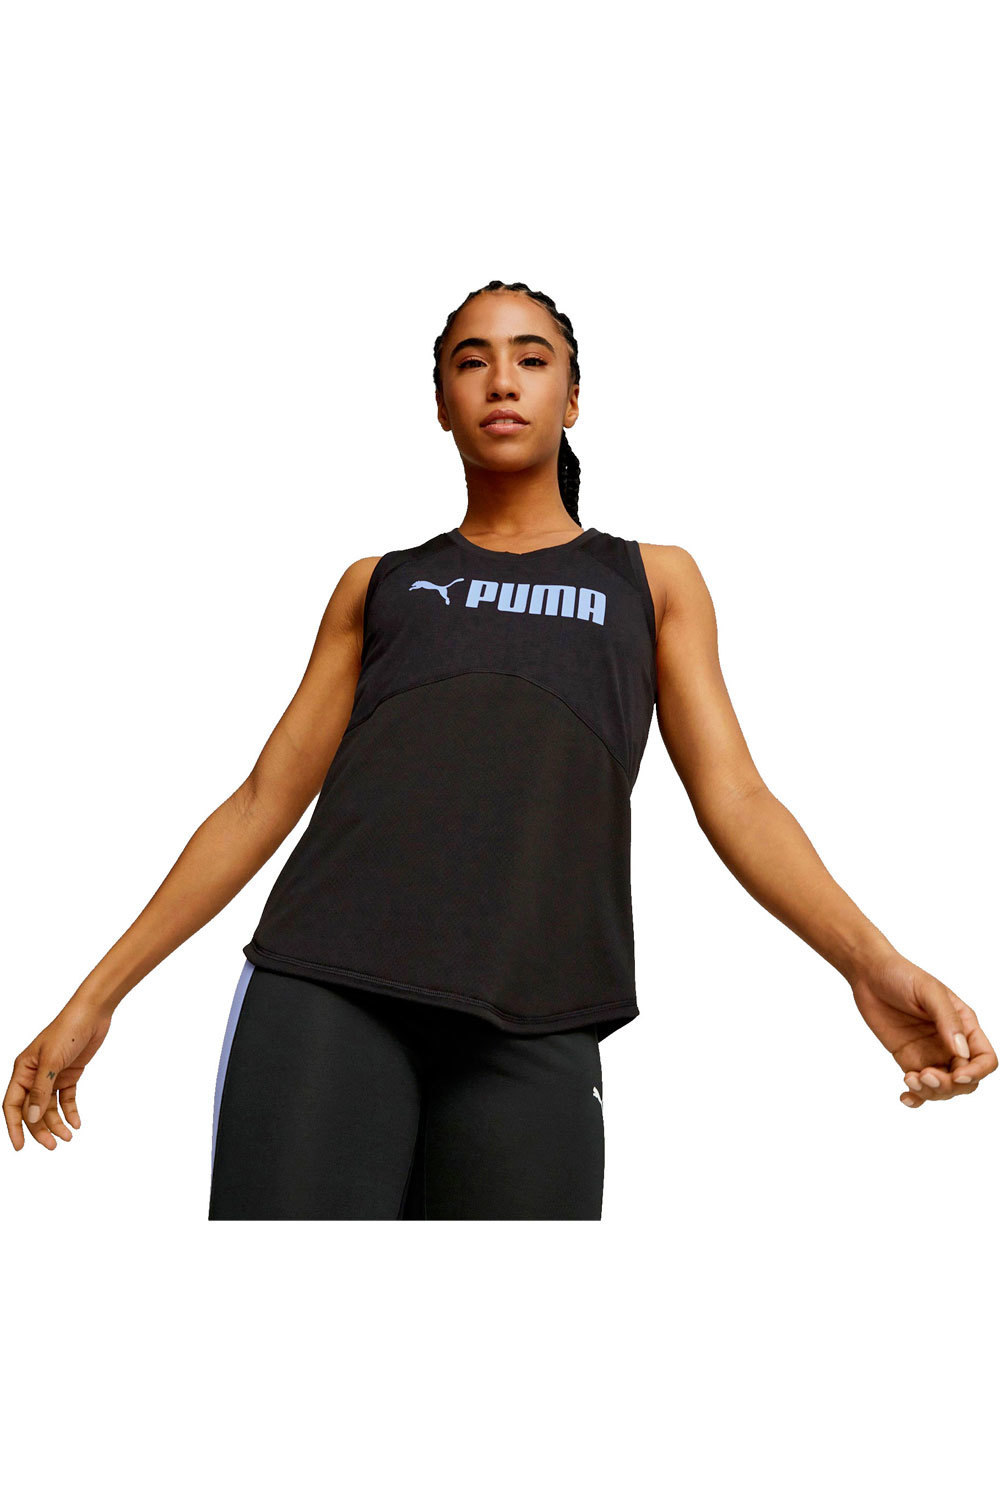 Puma camiseta tirantes fitness mujer PUMA FIT LOGO TANK vista frontal